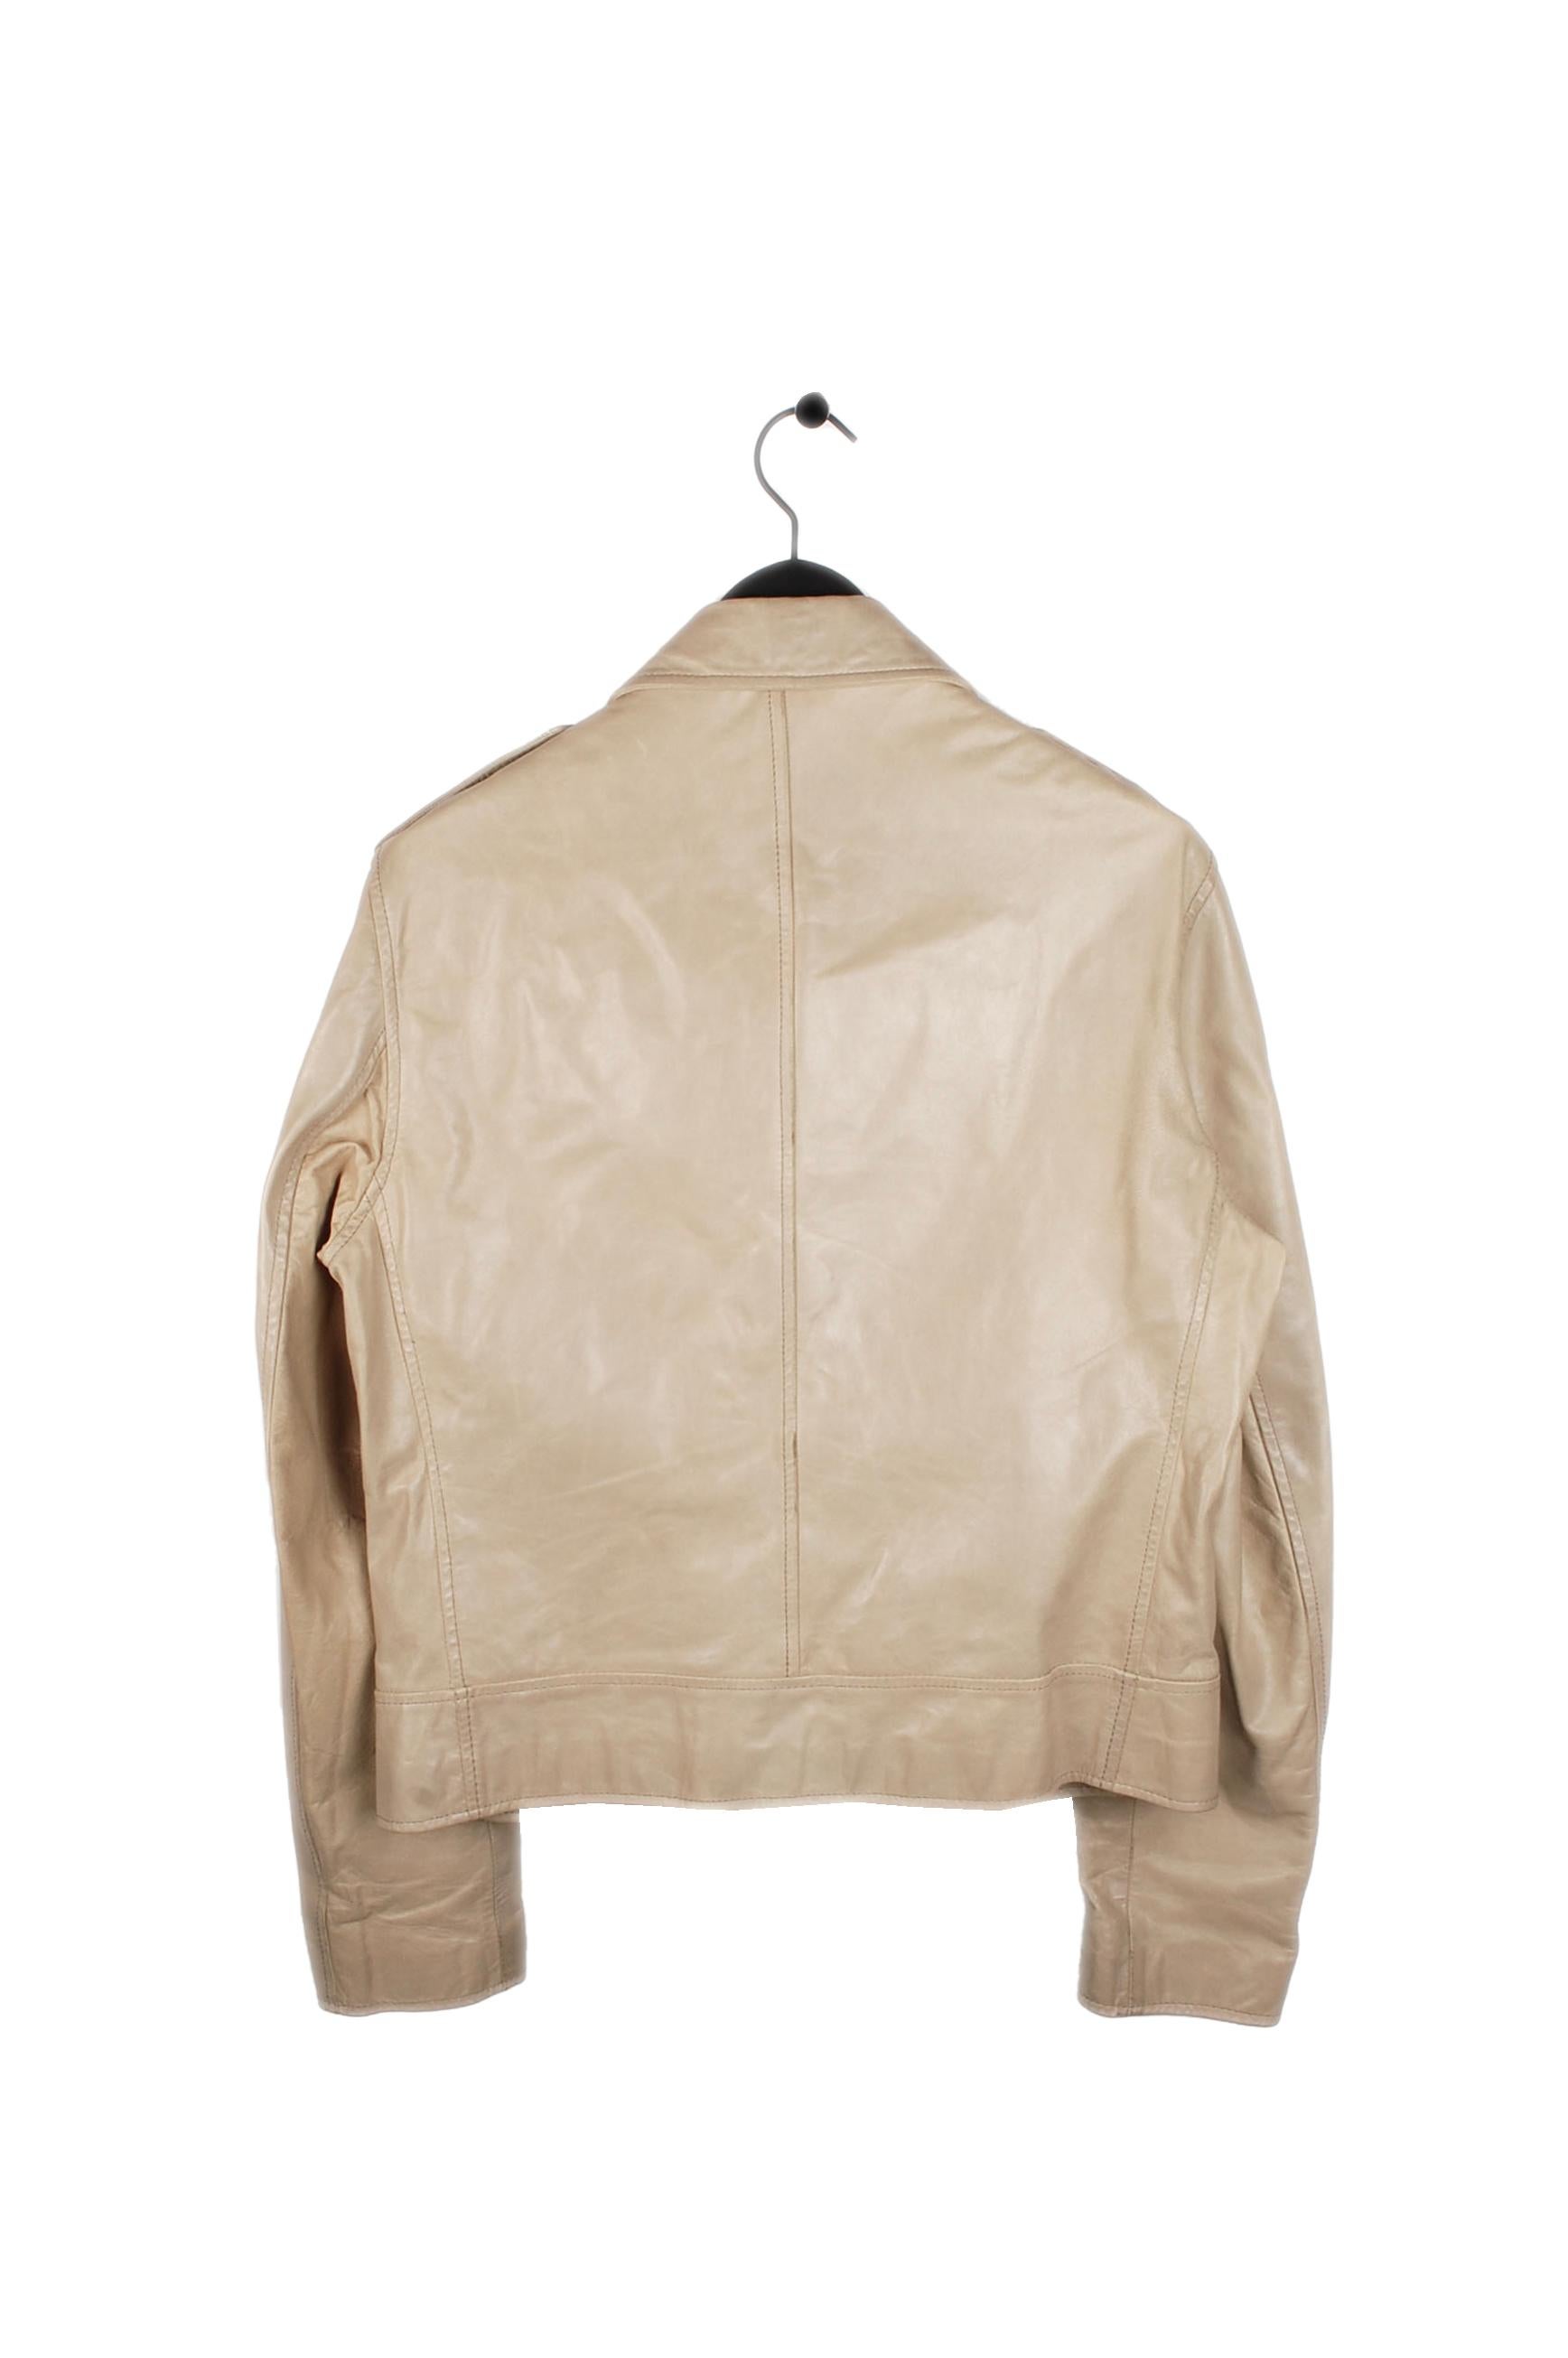 dolce & gabbana leather jacket vintage